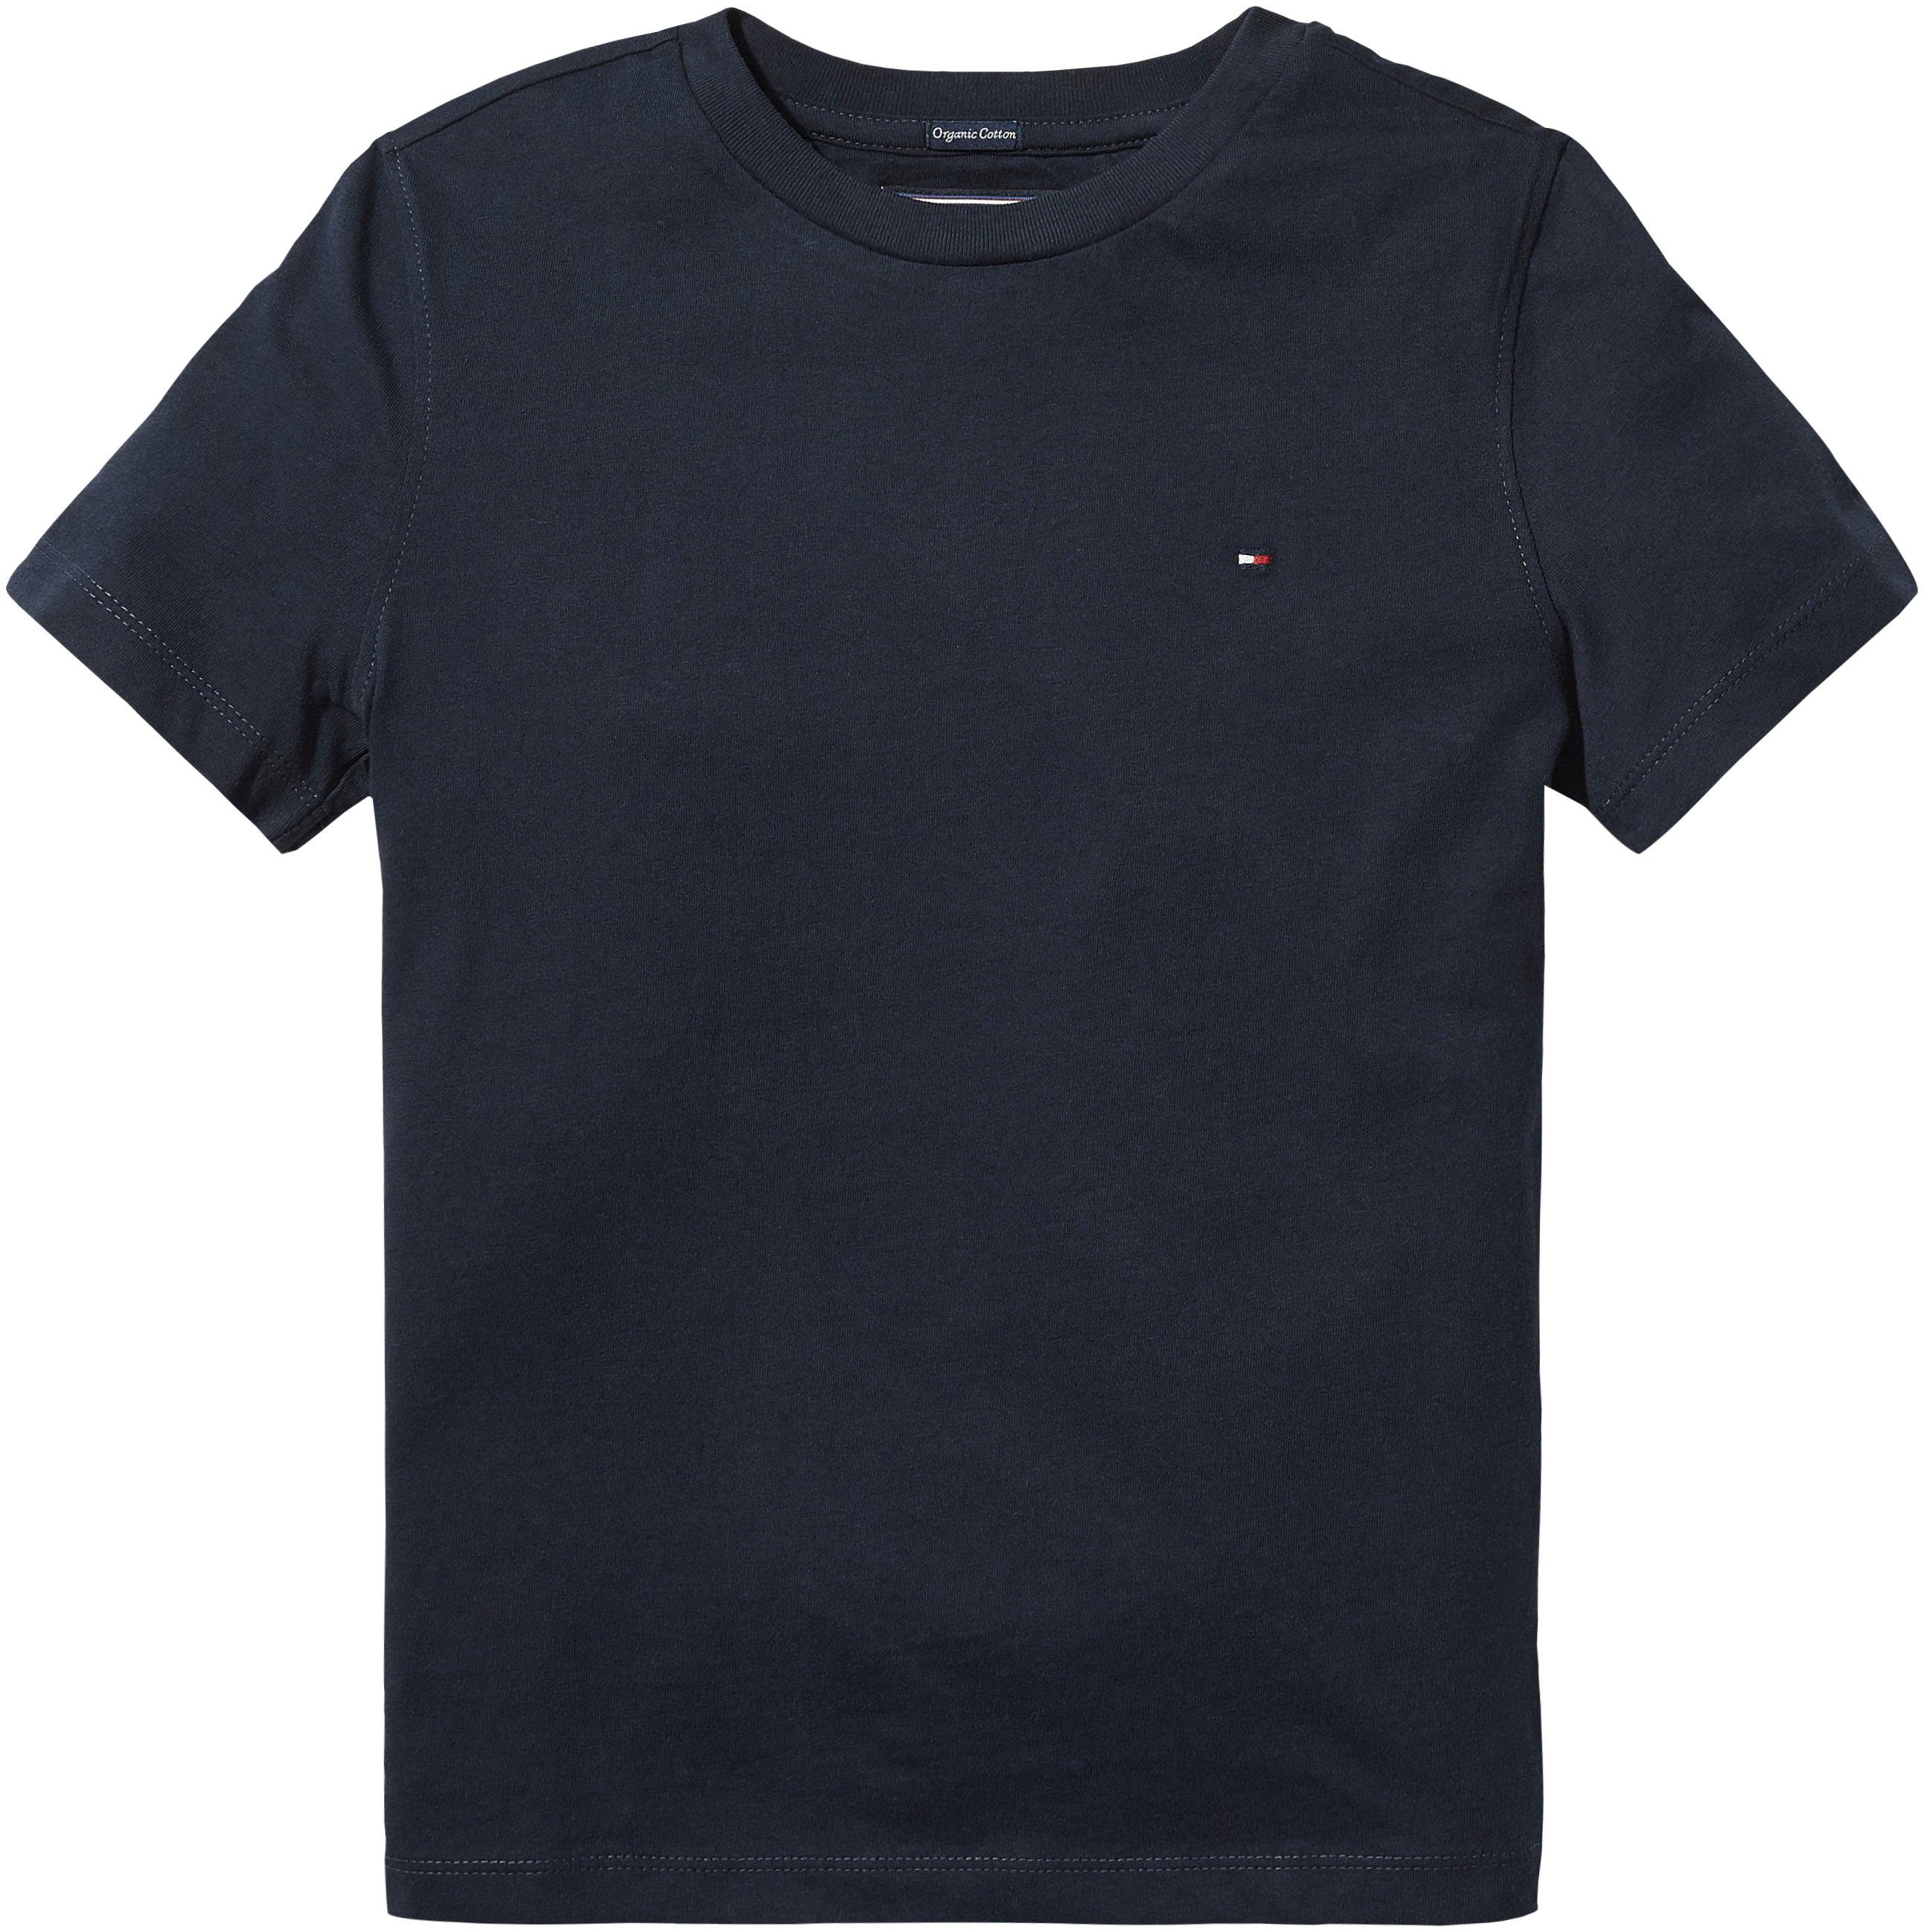 Tommy Hilfiger T-Shirt BOYS BASIC CN Kinder Kids Junior KNIT MiniMe,für Jungen